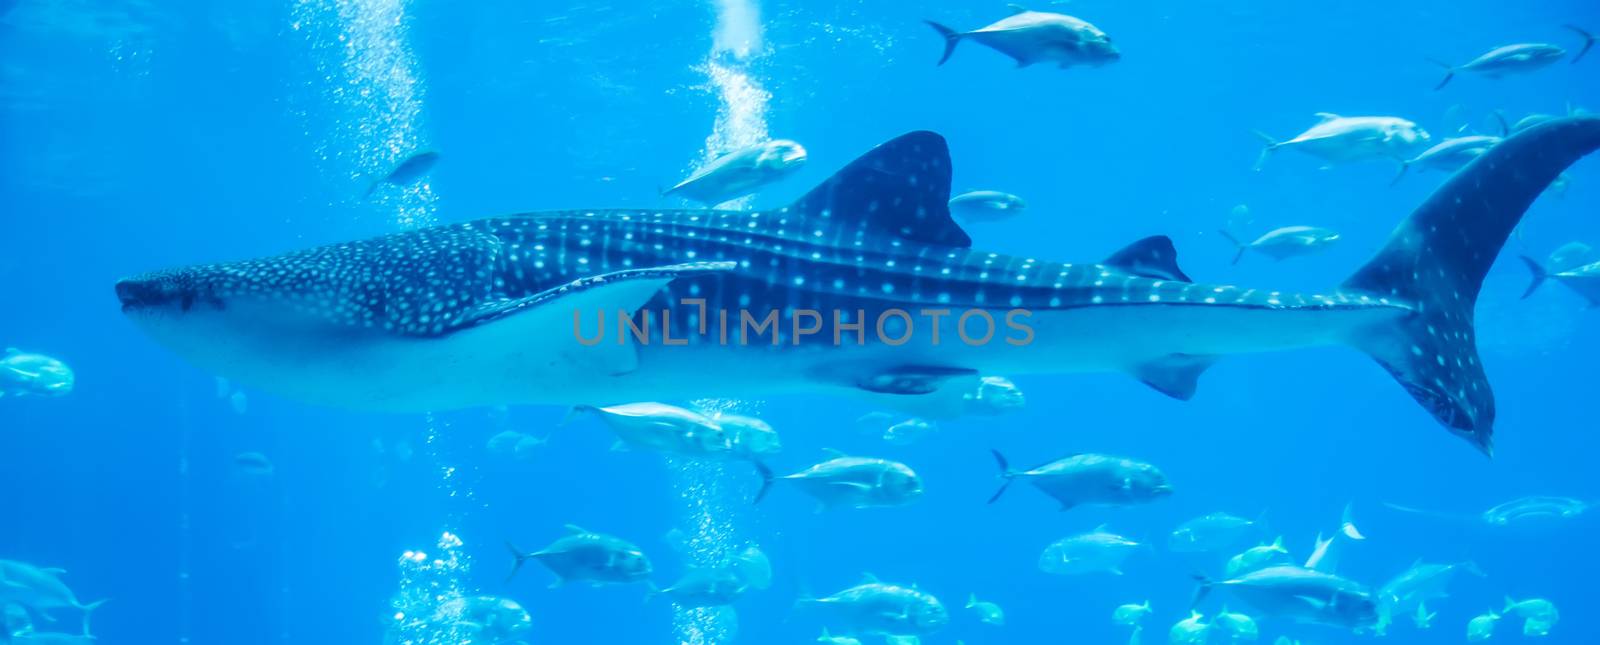 whale shark underwater in aquarium by digidreamgrafix